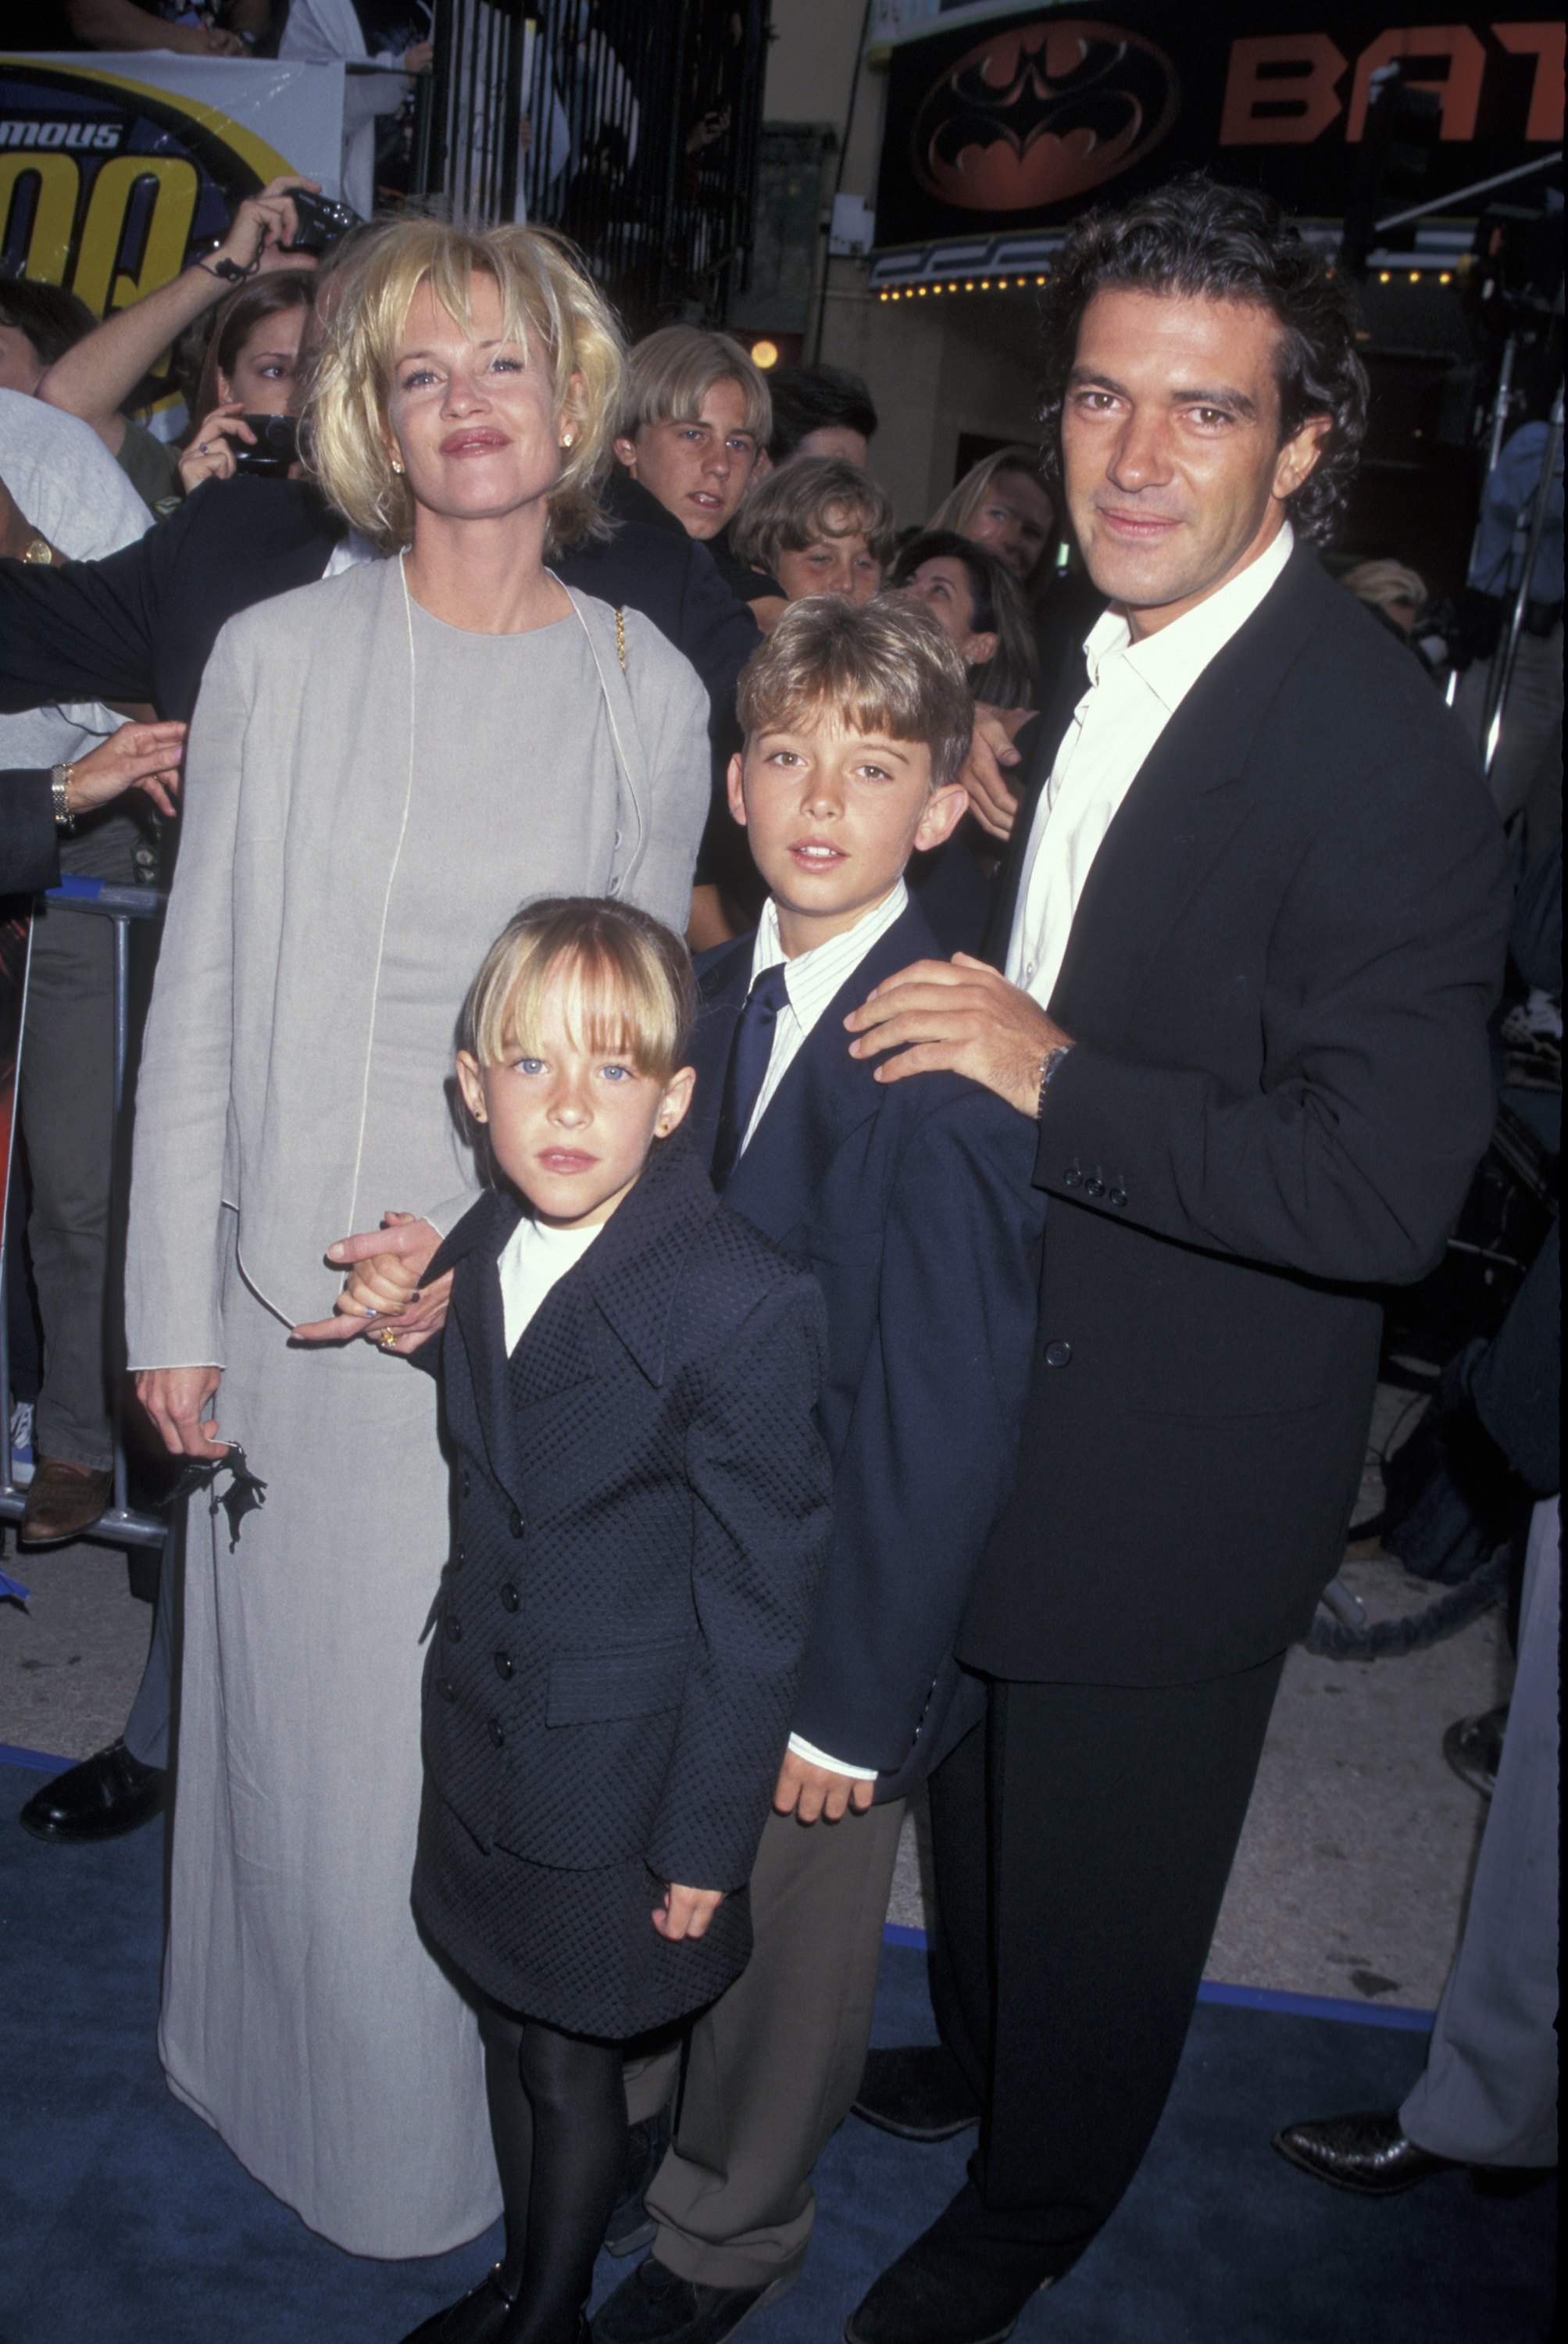 Melanie Griffith, Dakota Johnson, Alexander Bauer, and Antonio Banderas at the Los Angeles premiere of "Batman & Robin," 1997 | Source: Getty Images